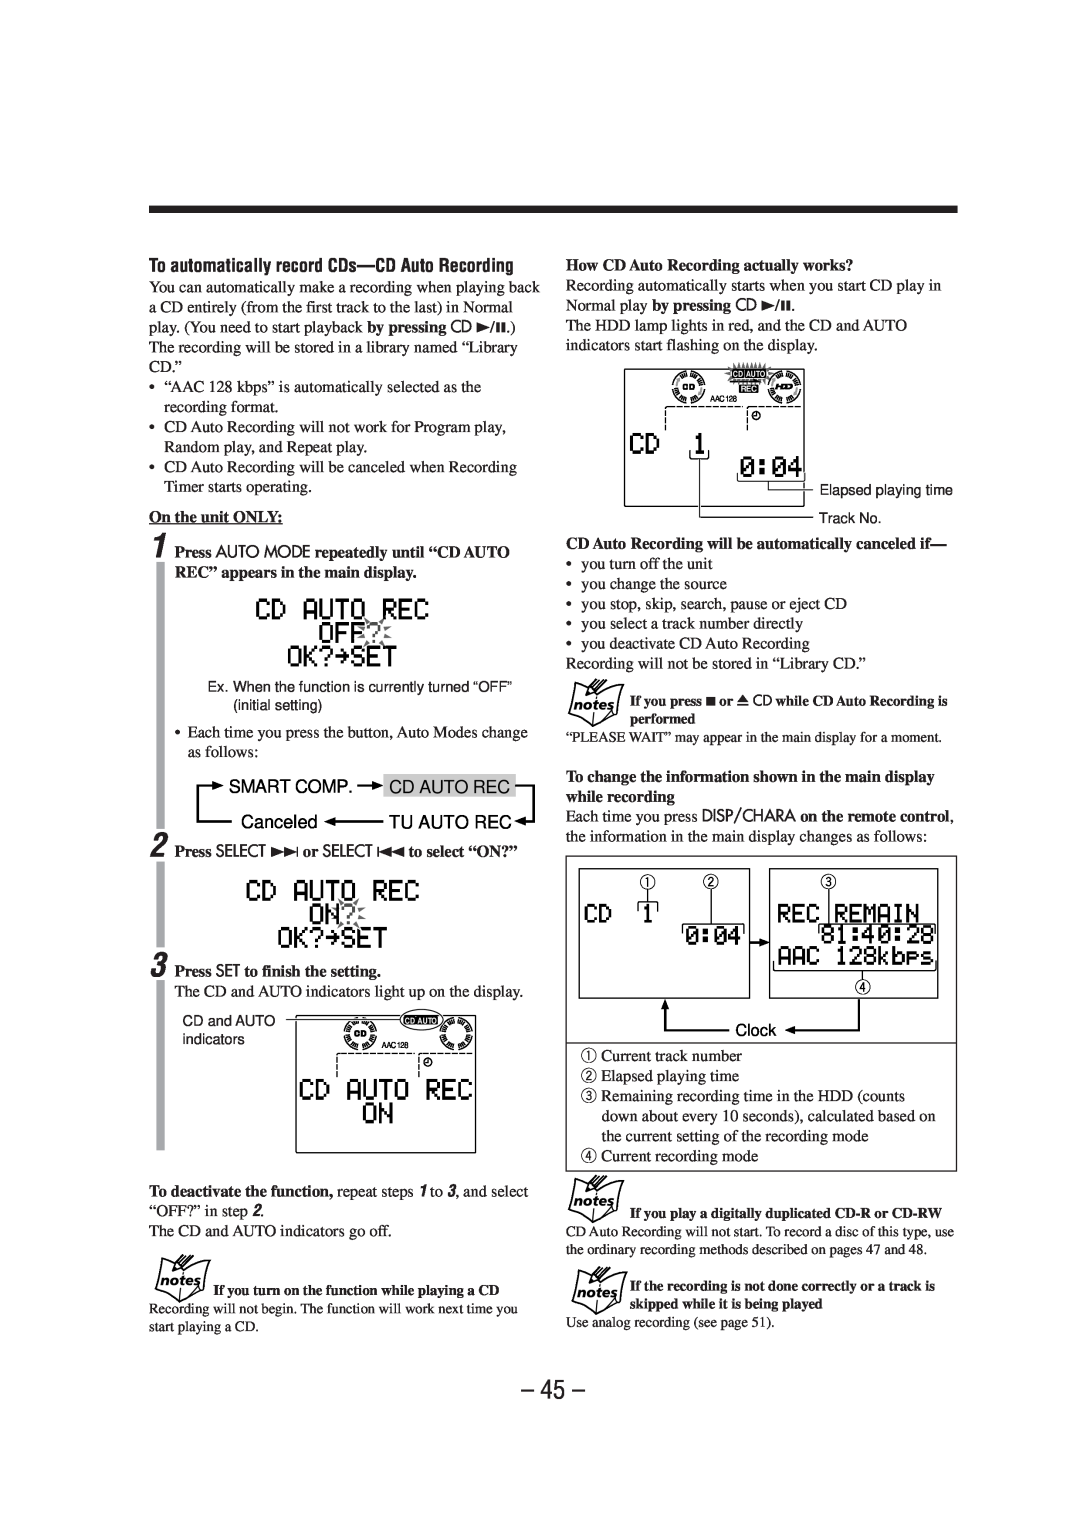 JVC CA-NXHD10R manual 45, SMART COMP. CD AUTO REC Canceled TU AUTO REC, To automatically record CDs—CDAuto Recording 